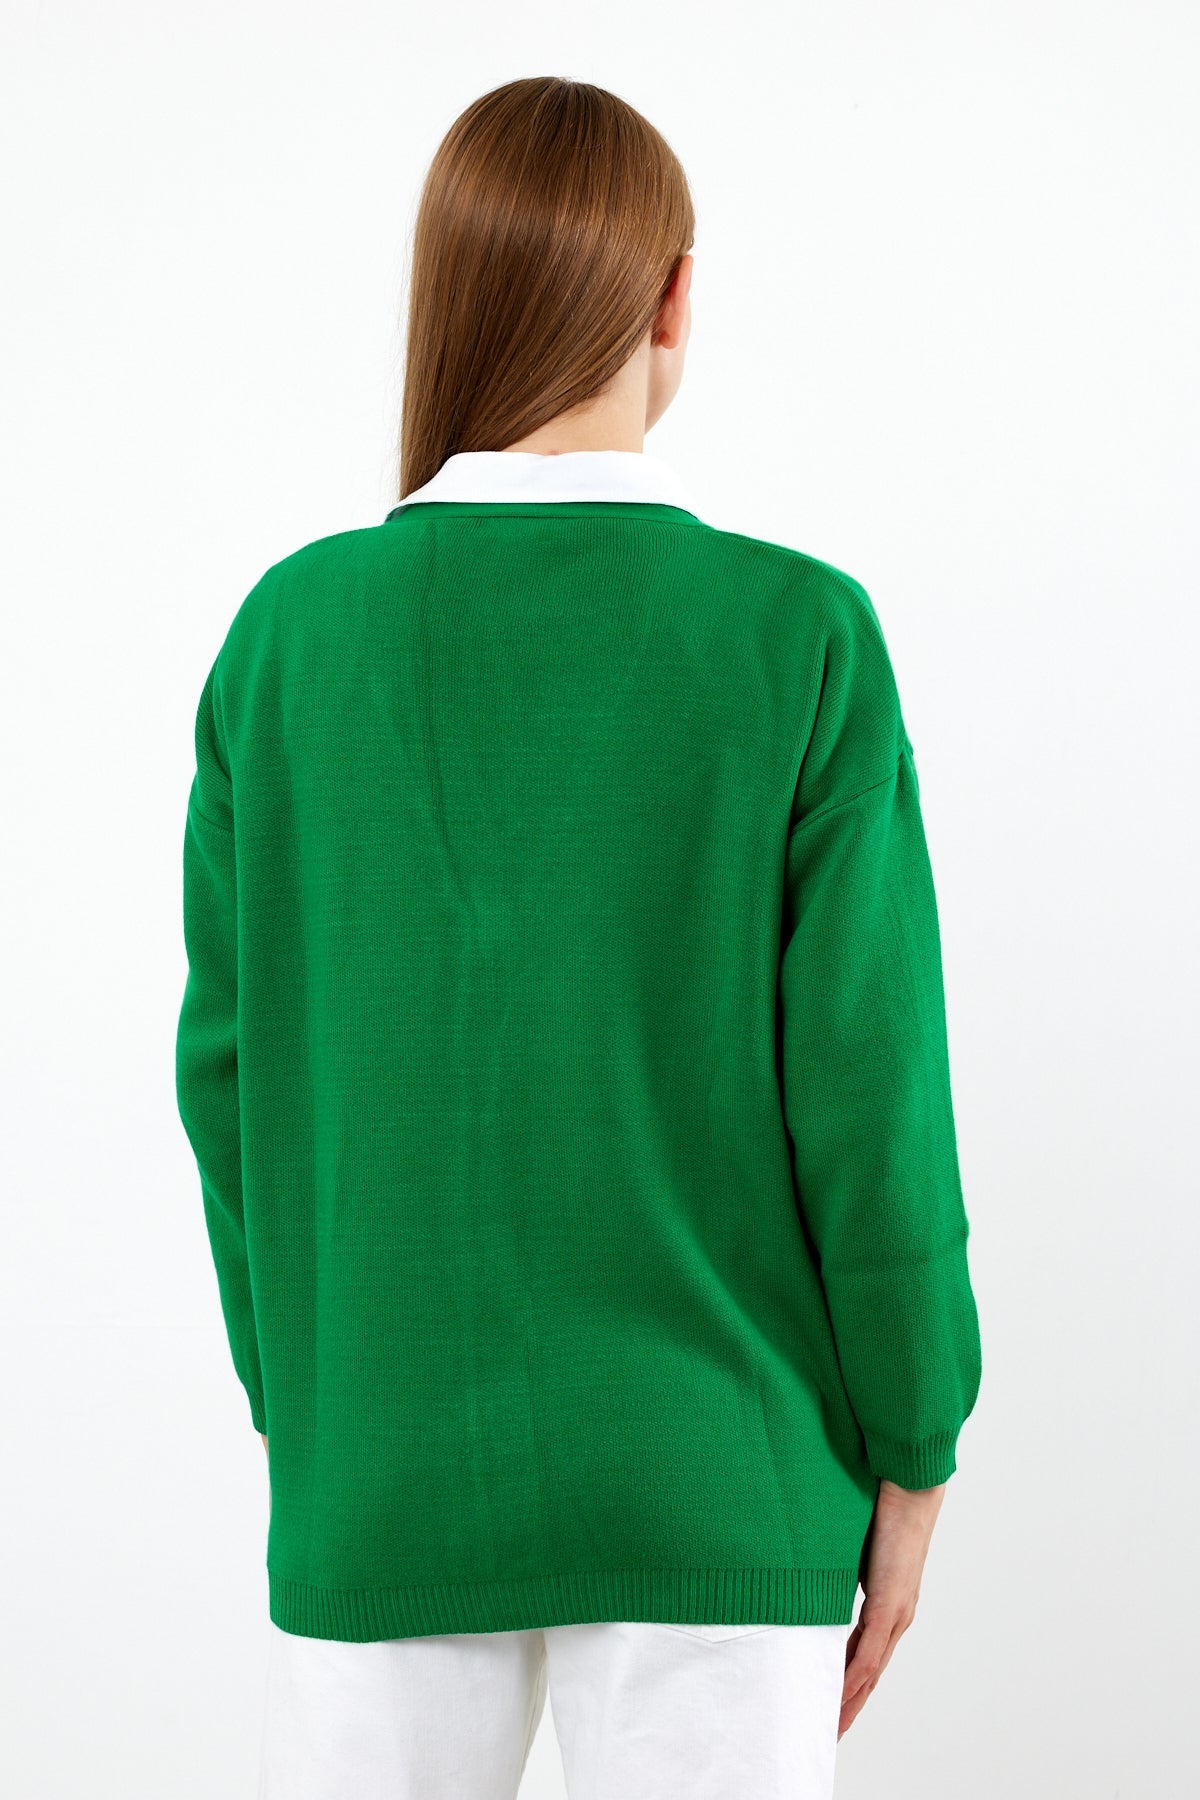 Solid Color Knit Cardigan Mid Length - SKU: 1254